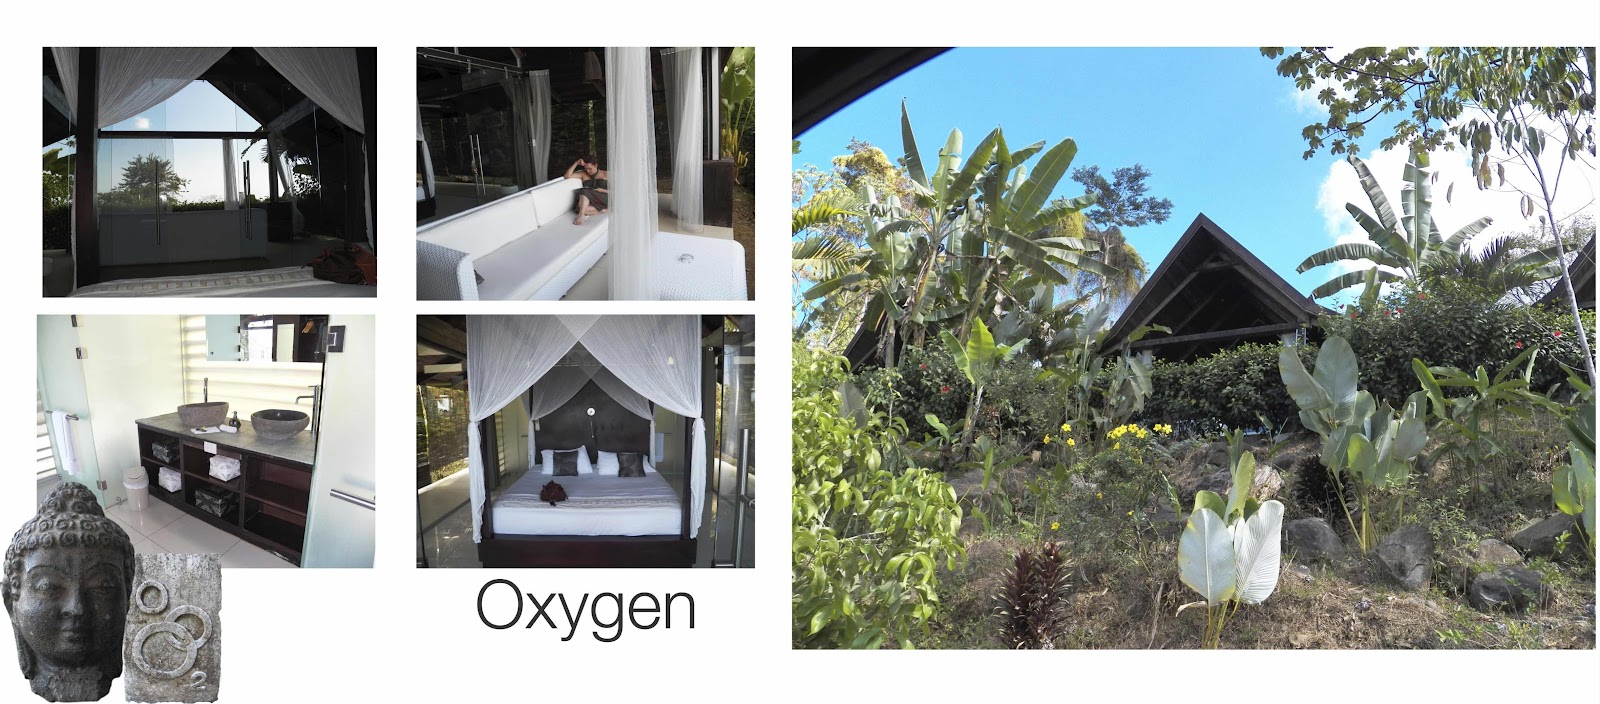 Oxygen, Costa Rica